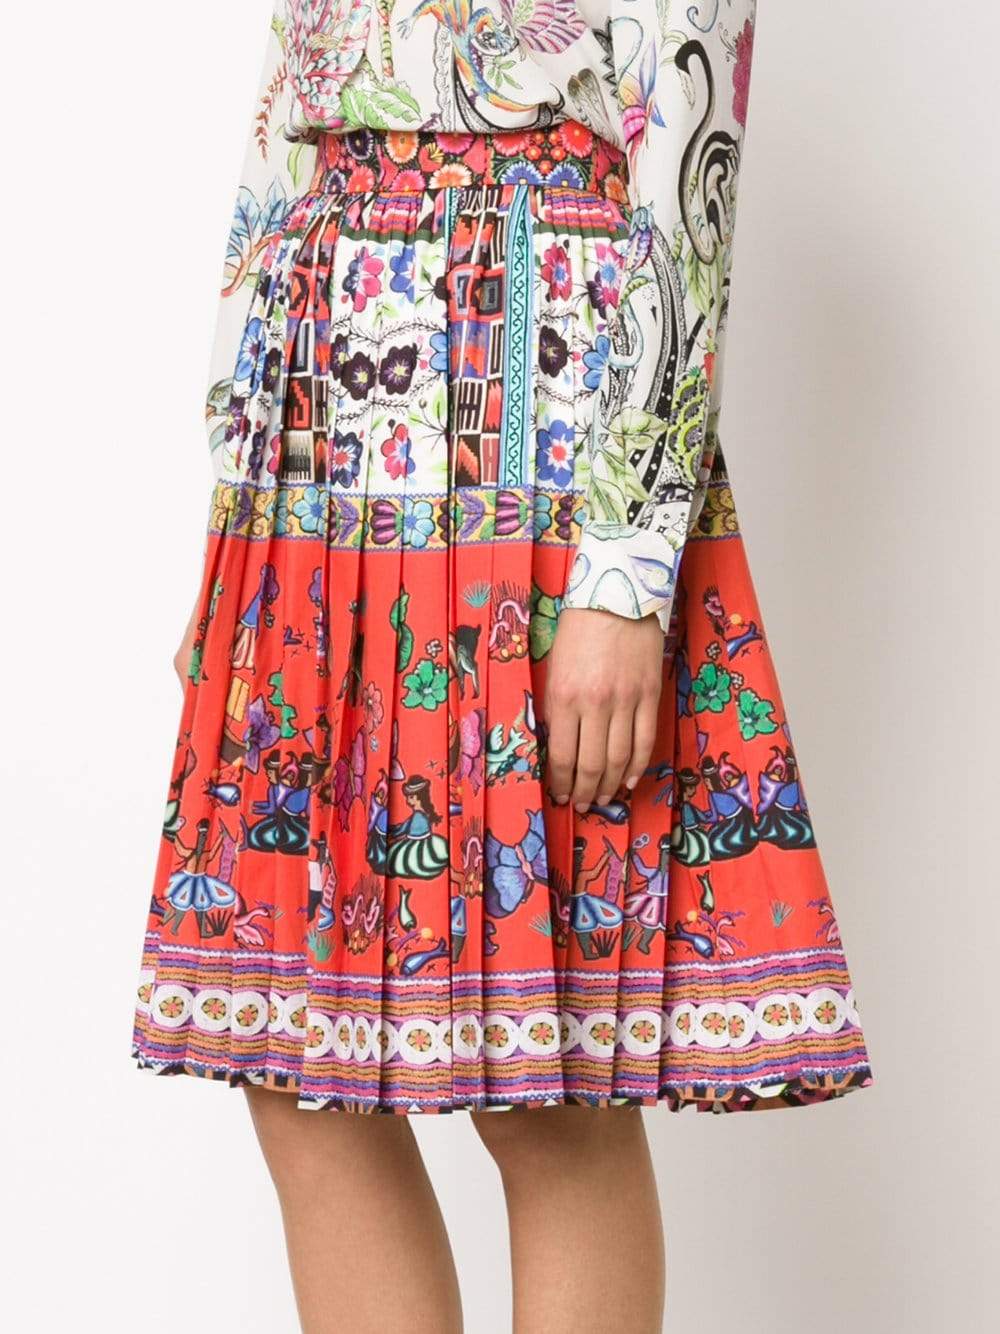 STELLA JEAN-Liquidatore Floral Print Skirt-